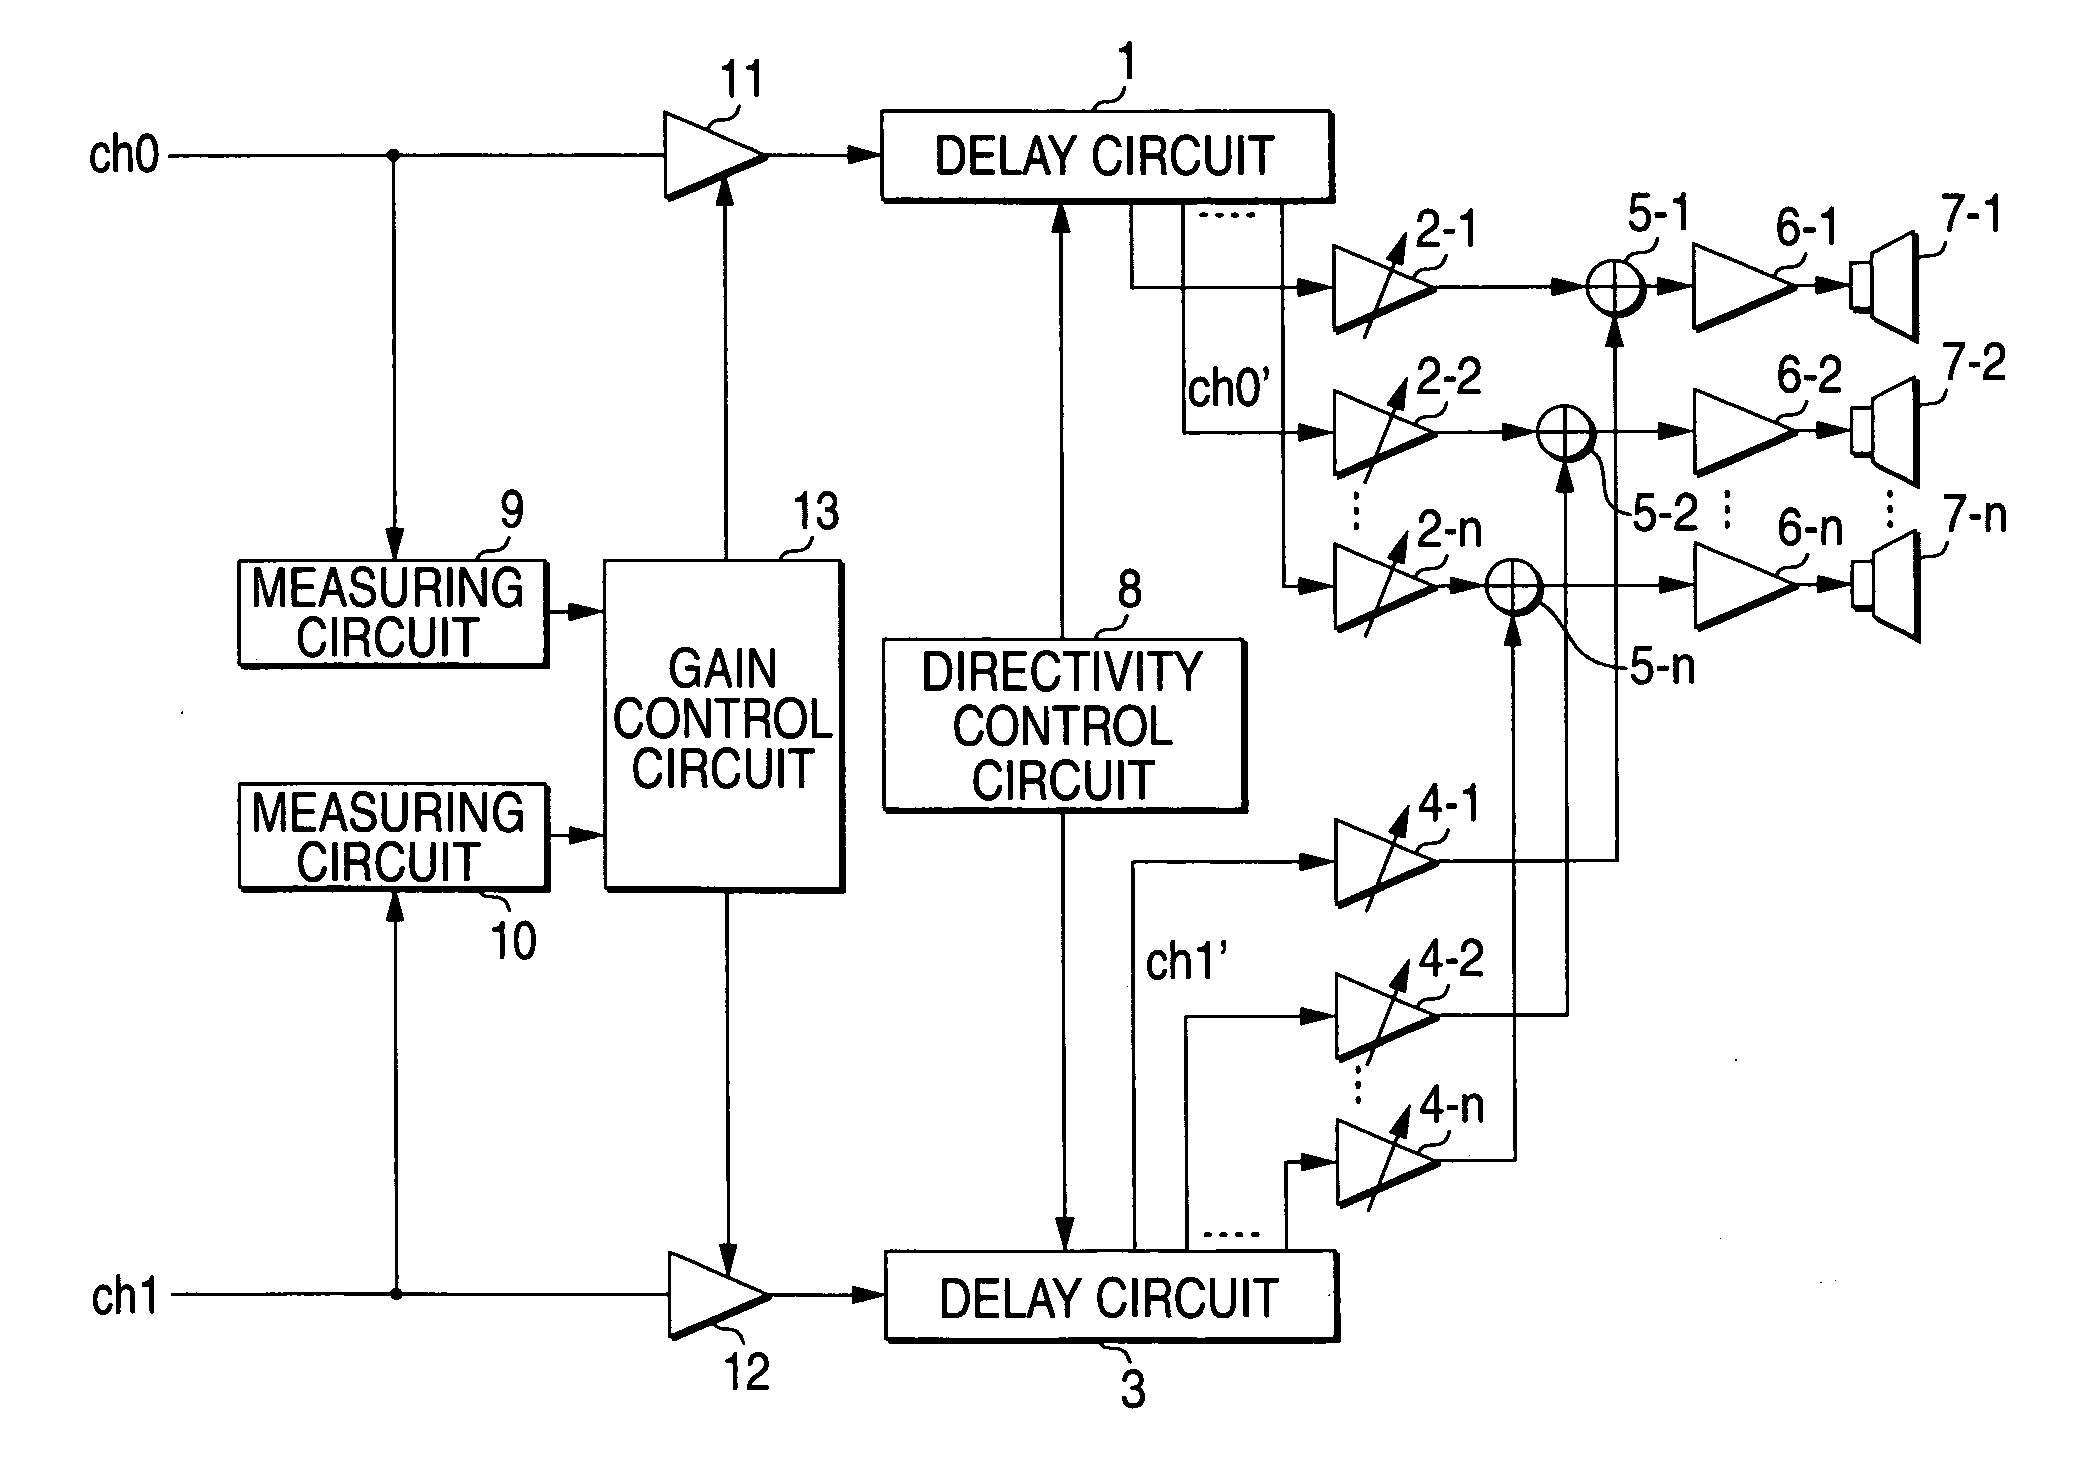 Audio output apparatus